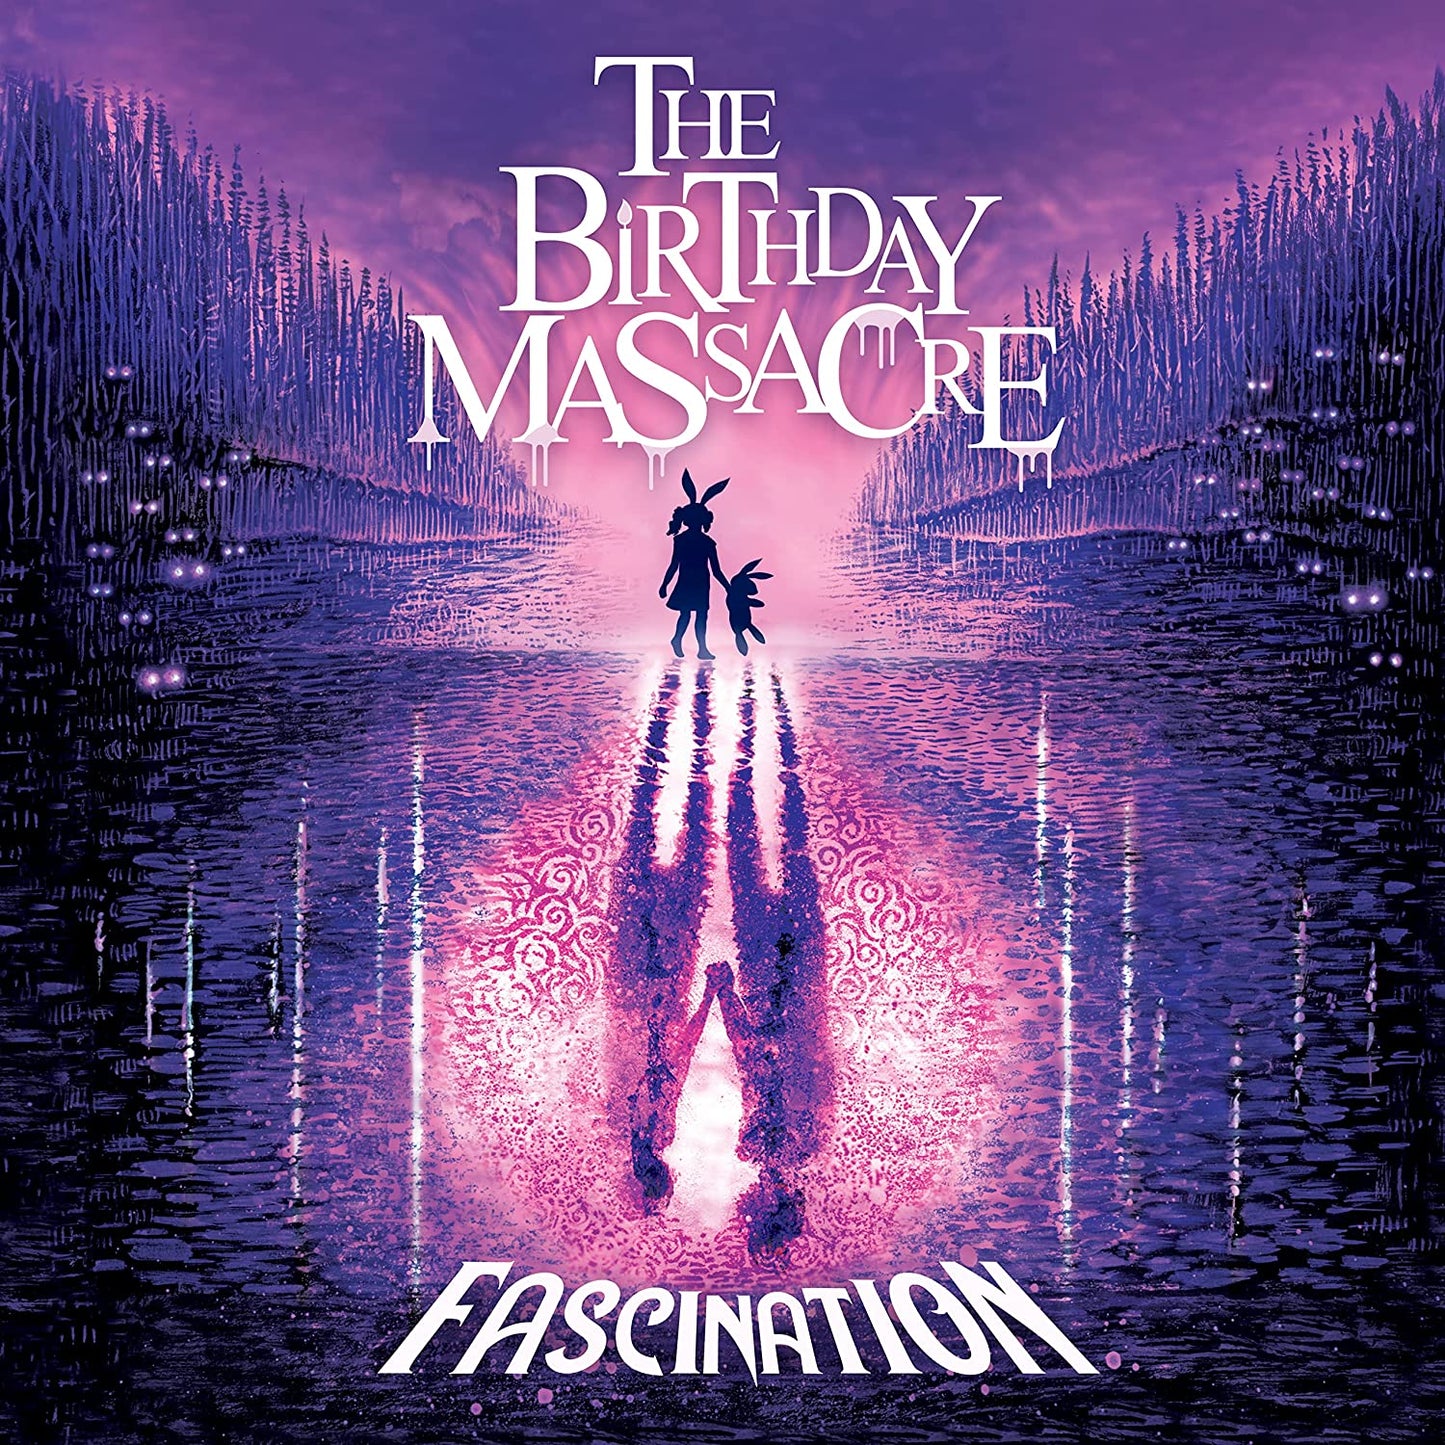 CD - The Birthday Massacre - Fascination